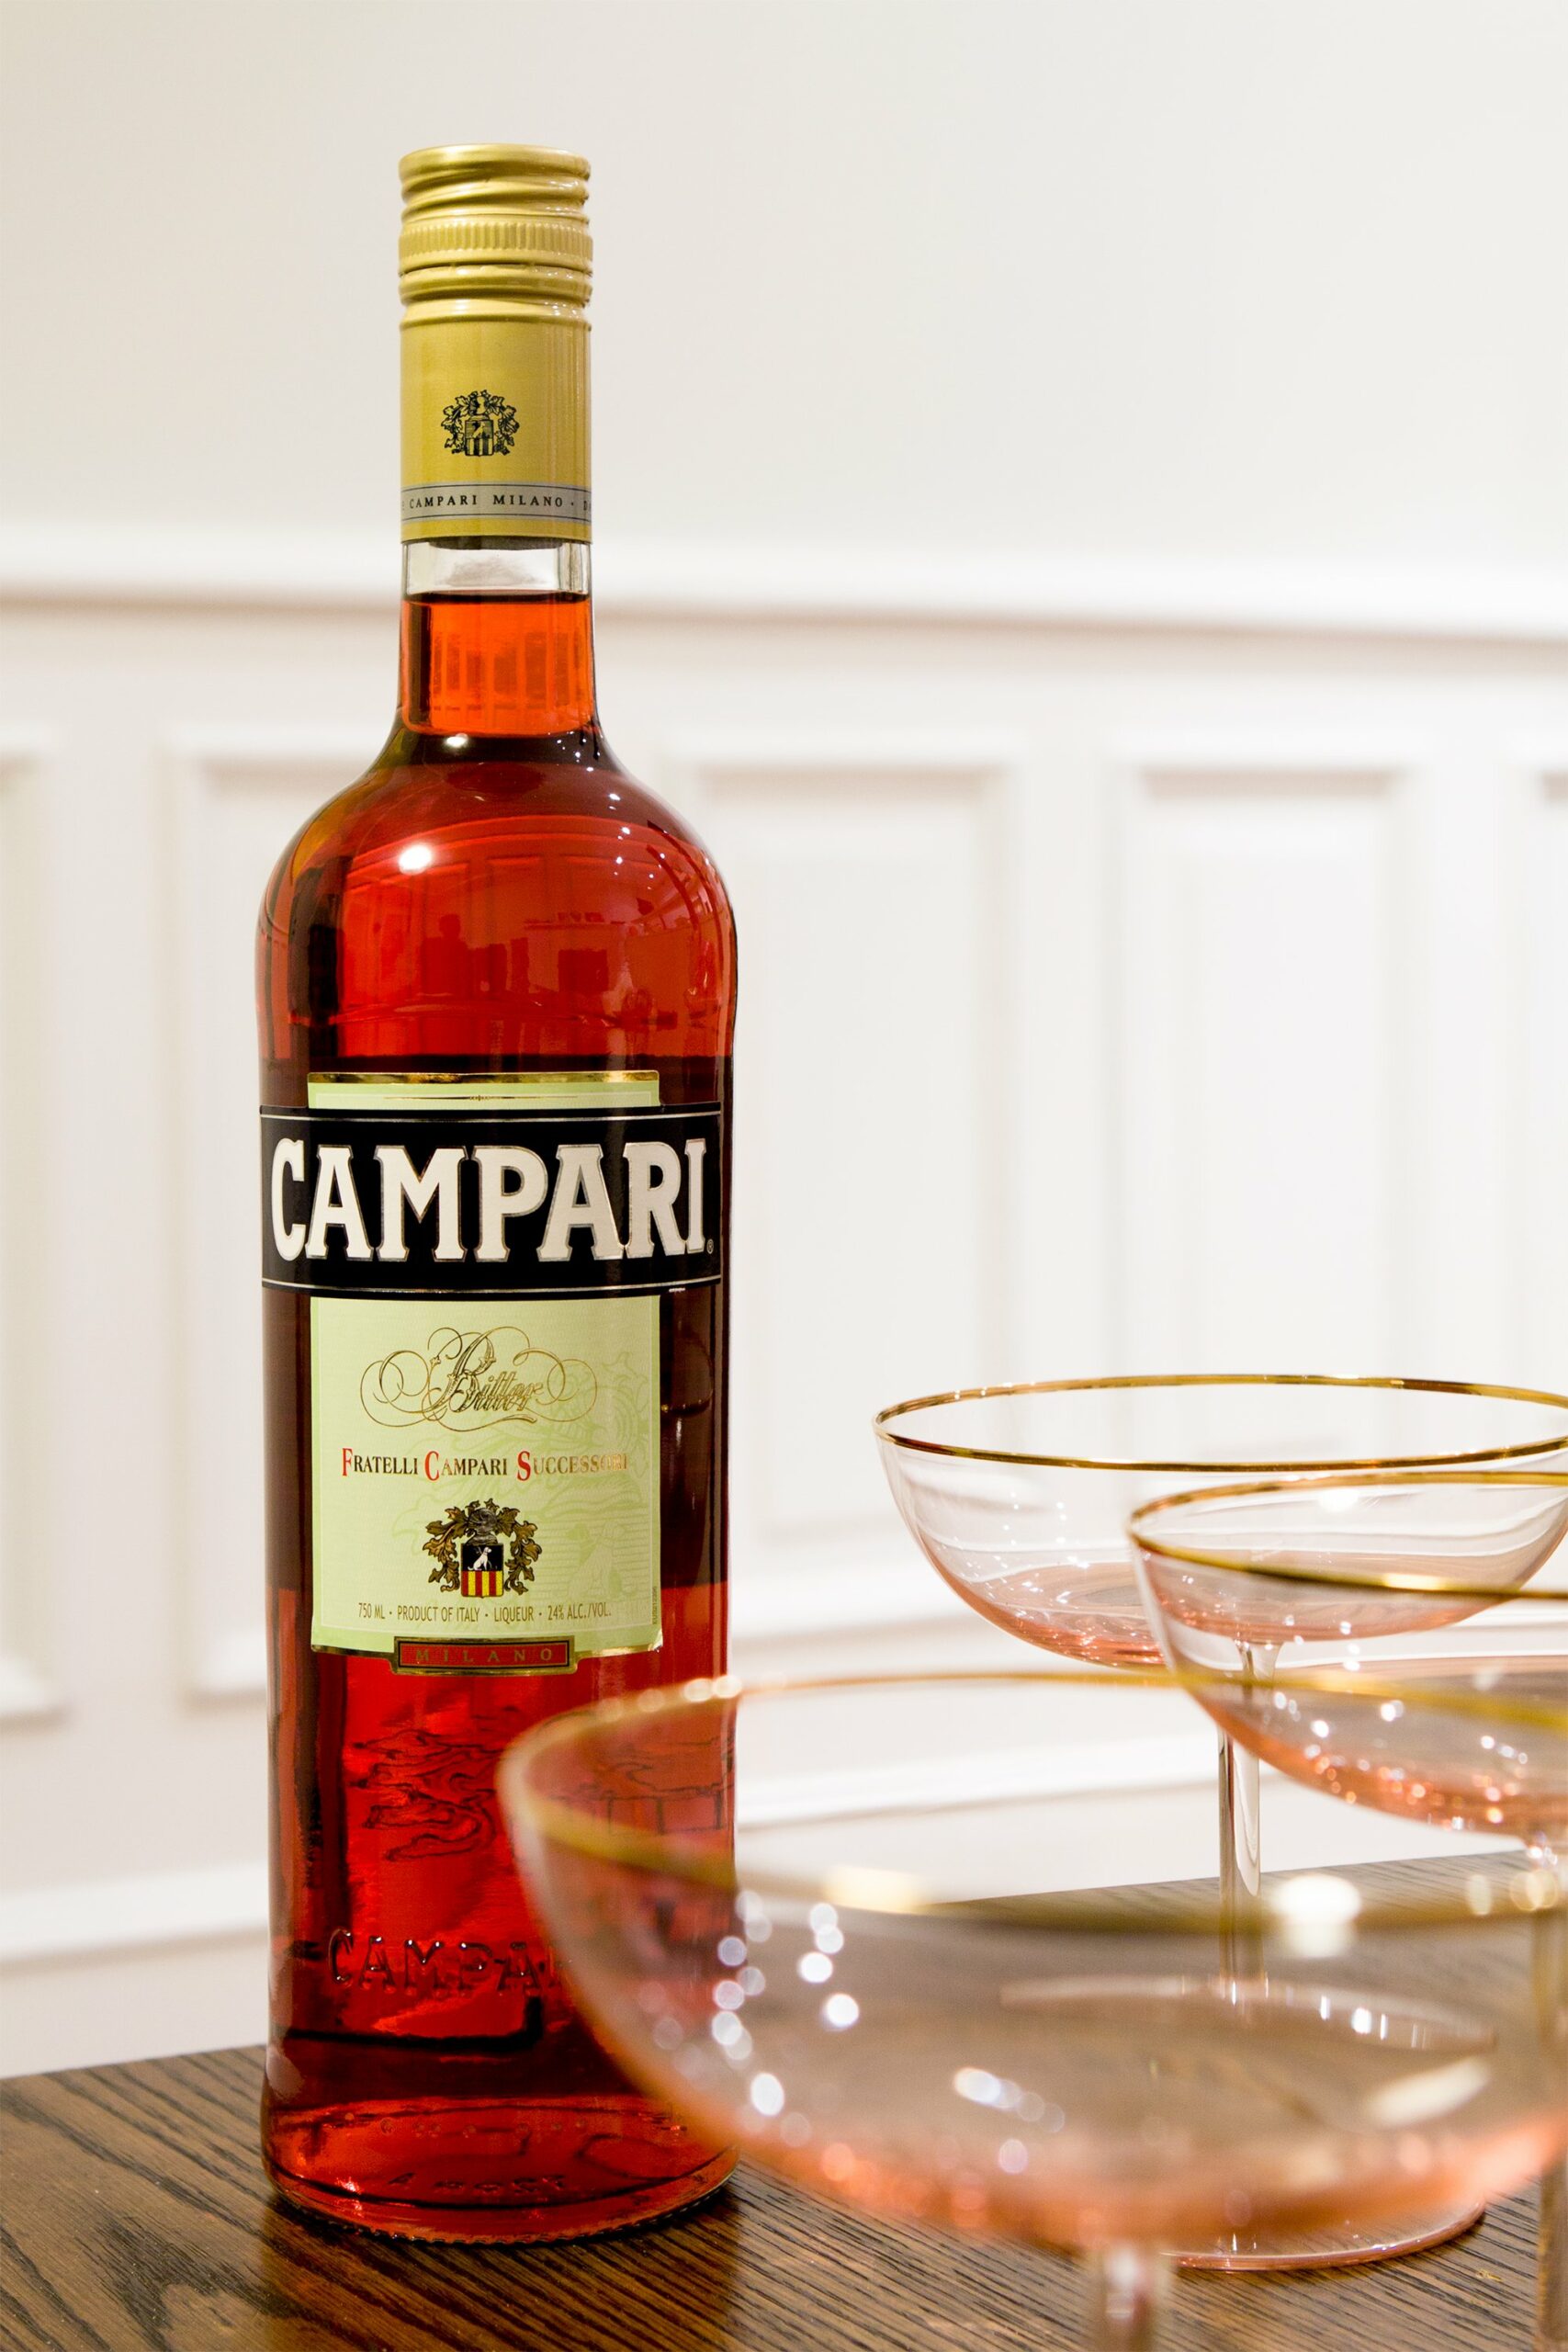 Pre-Order A Bottle Of Campari Online